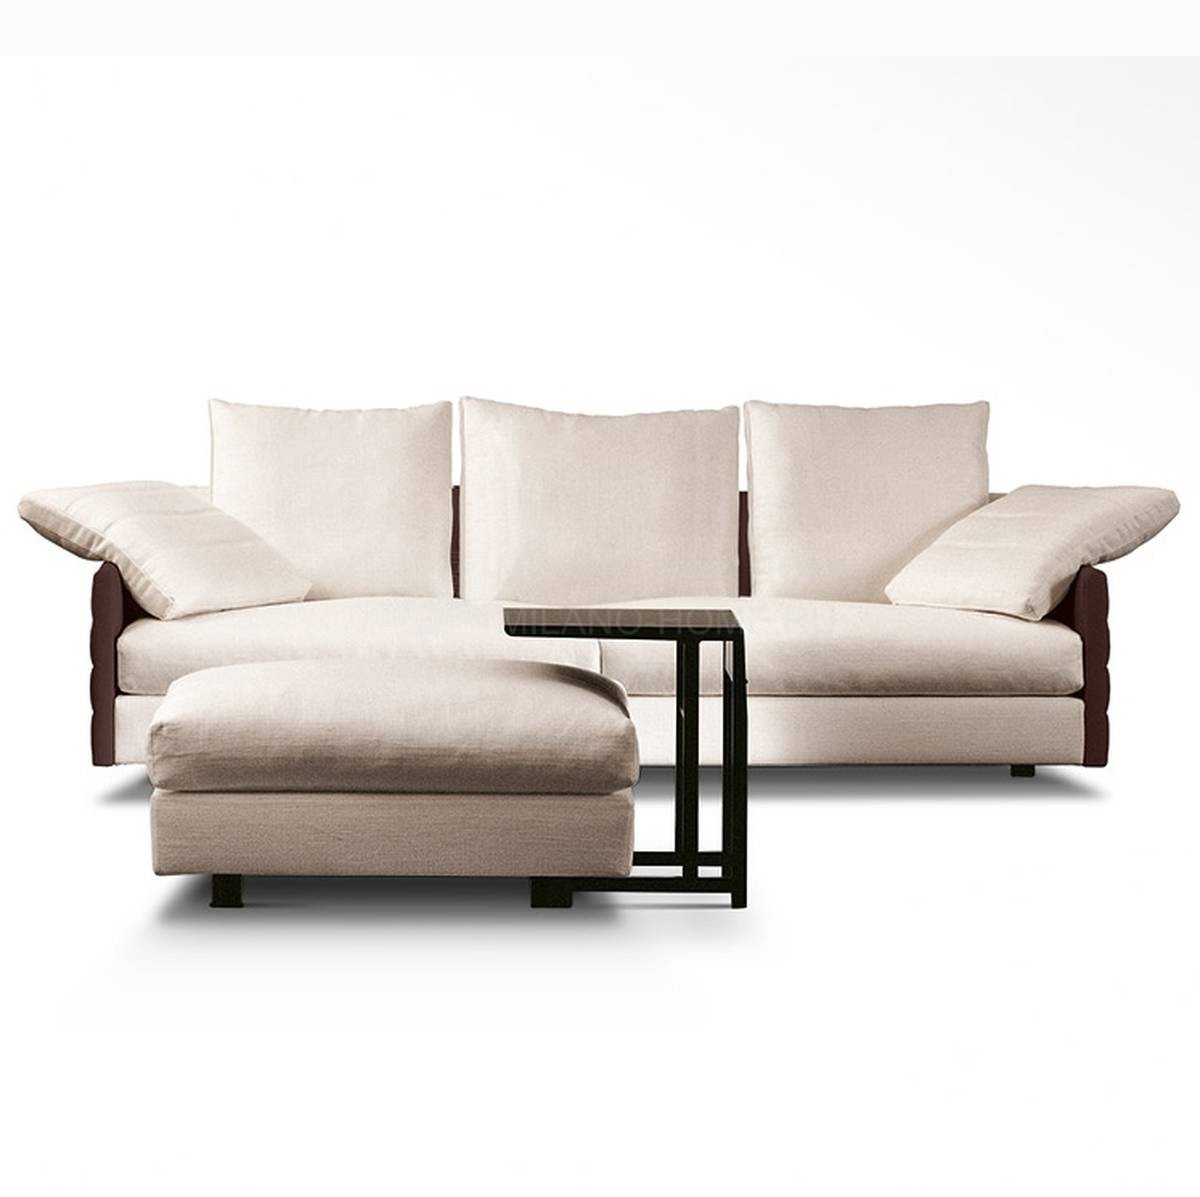 Прямой диван Wally / 66320-421 из Италии фабрики GIORGETTI